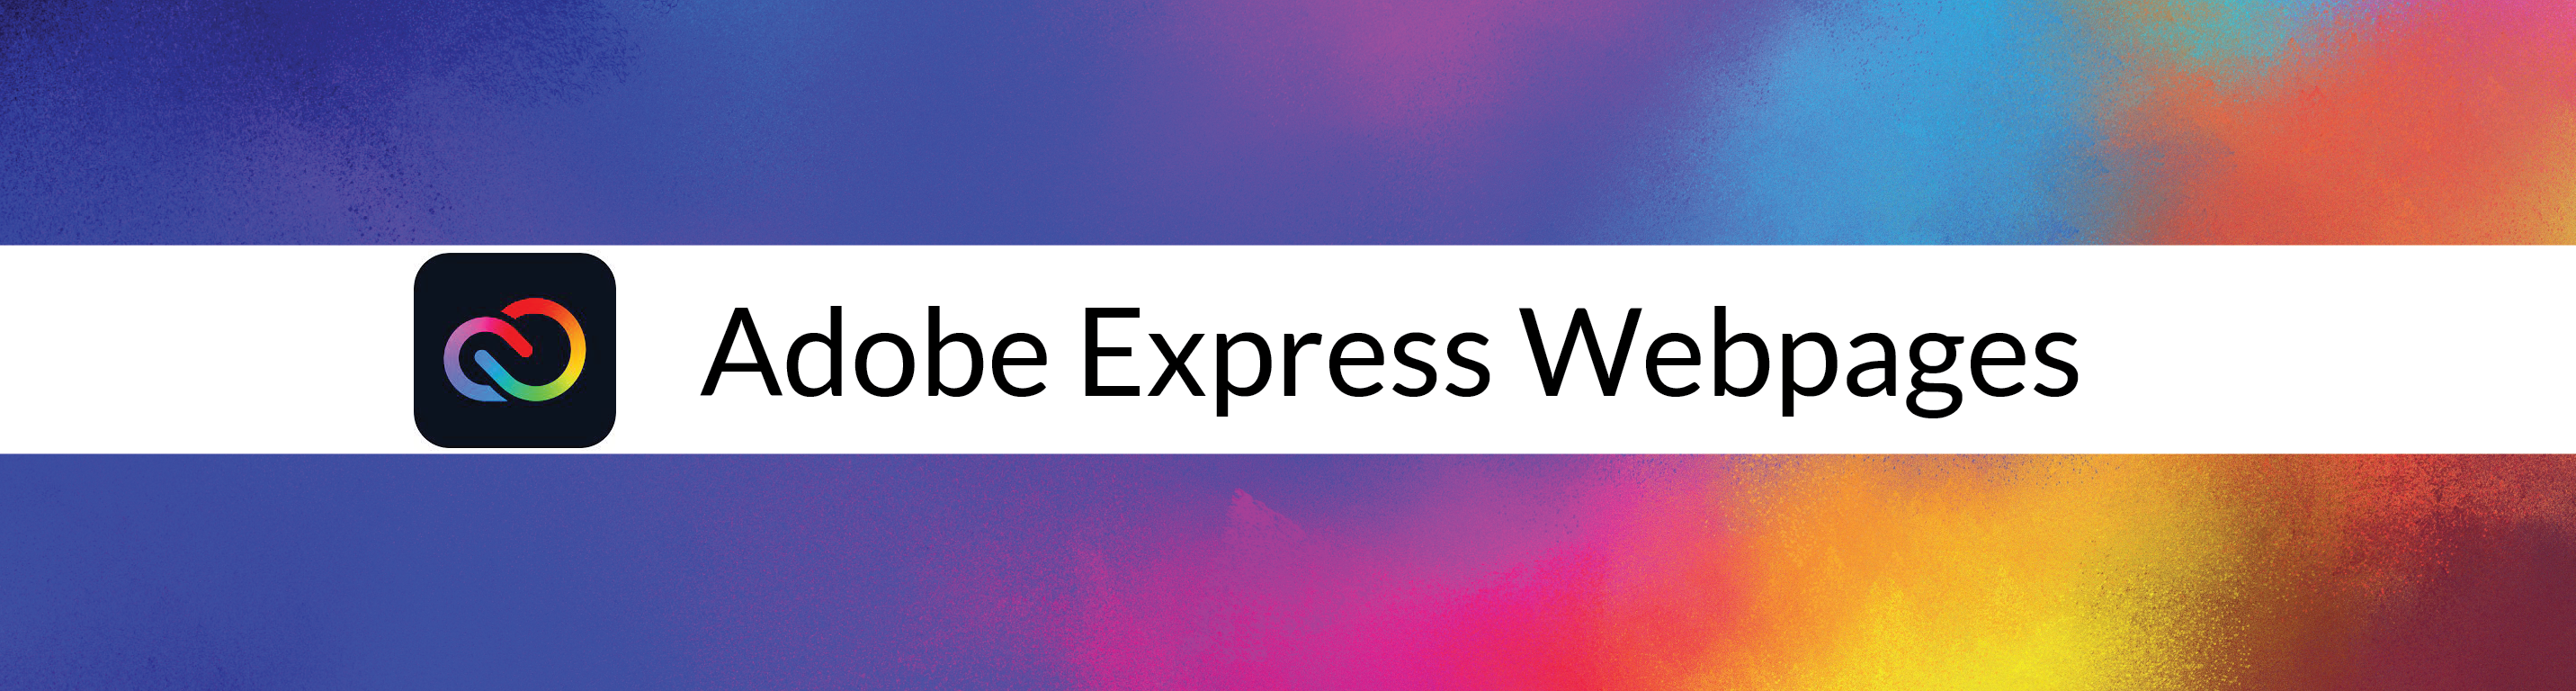 Adobe Express Webpages Banner (1).png